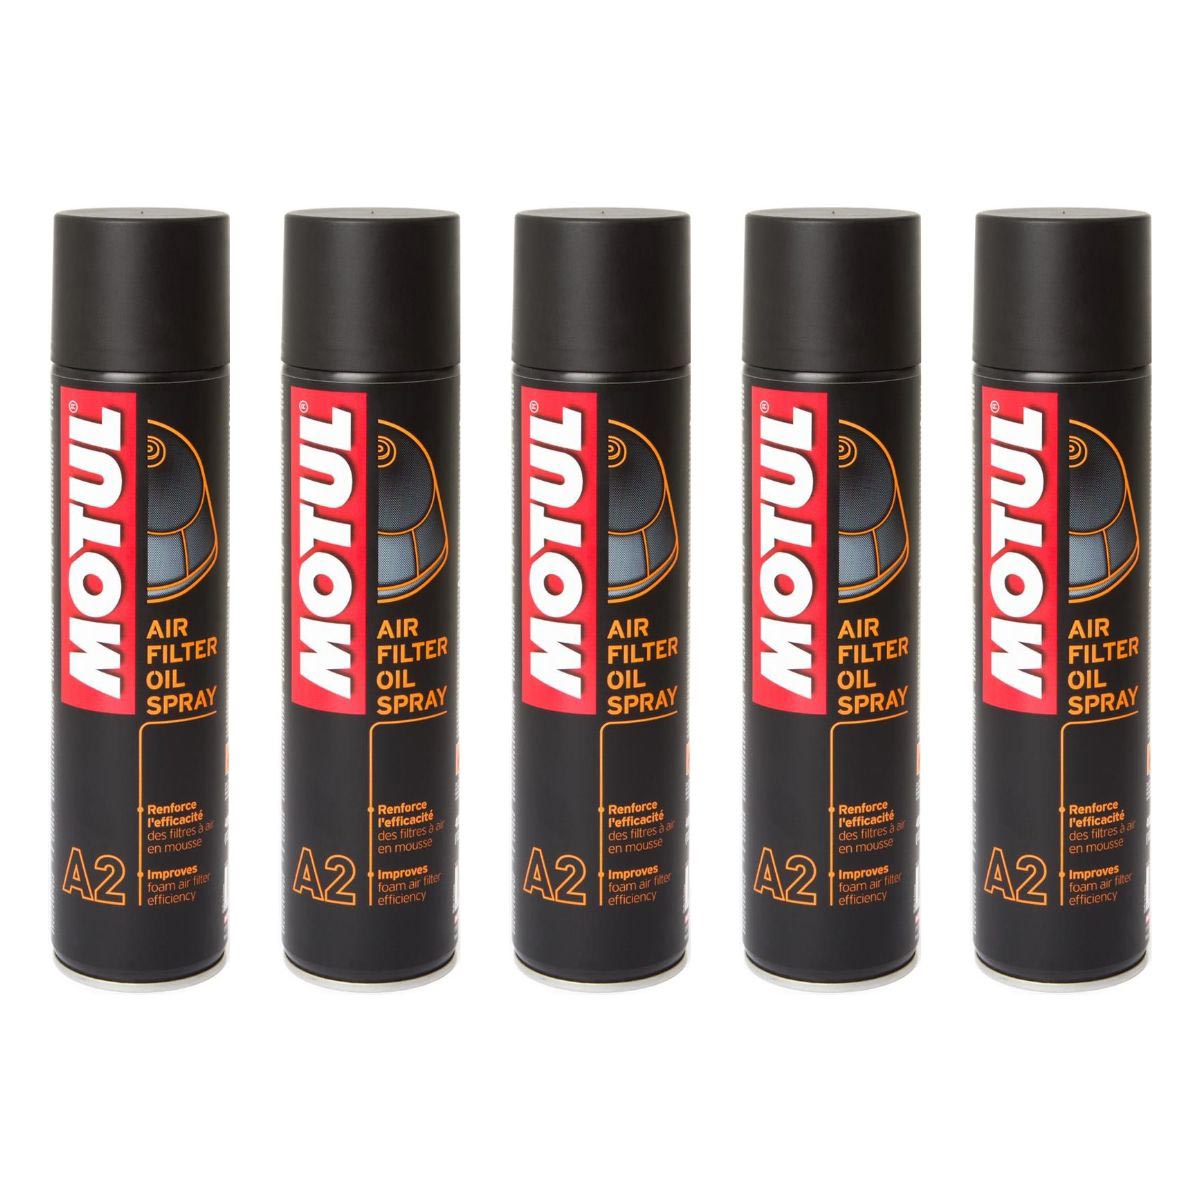 Motul Air Filter Oil Spray A2 Set: 5 pieces, 400 ml each